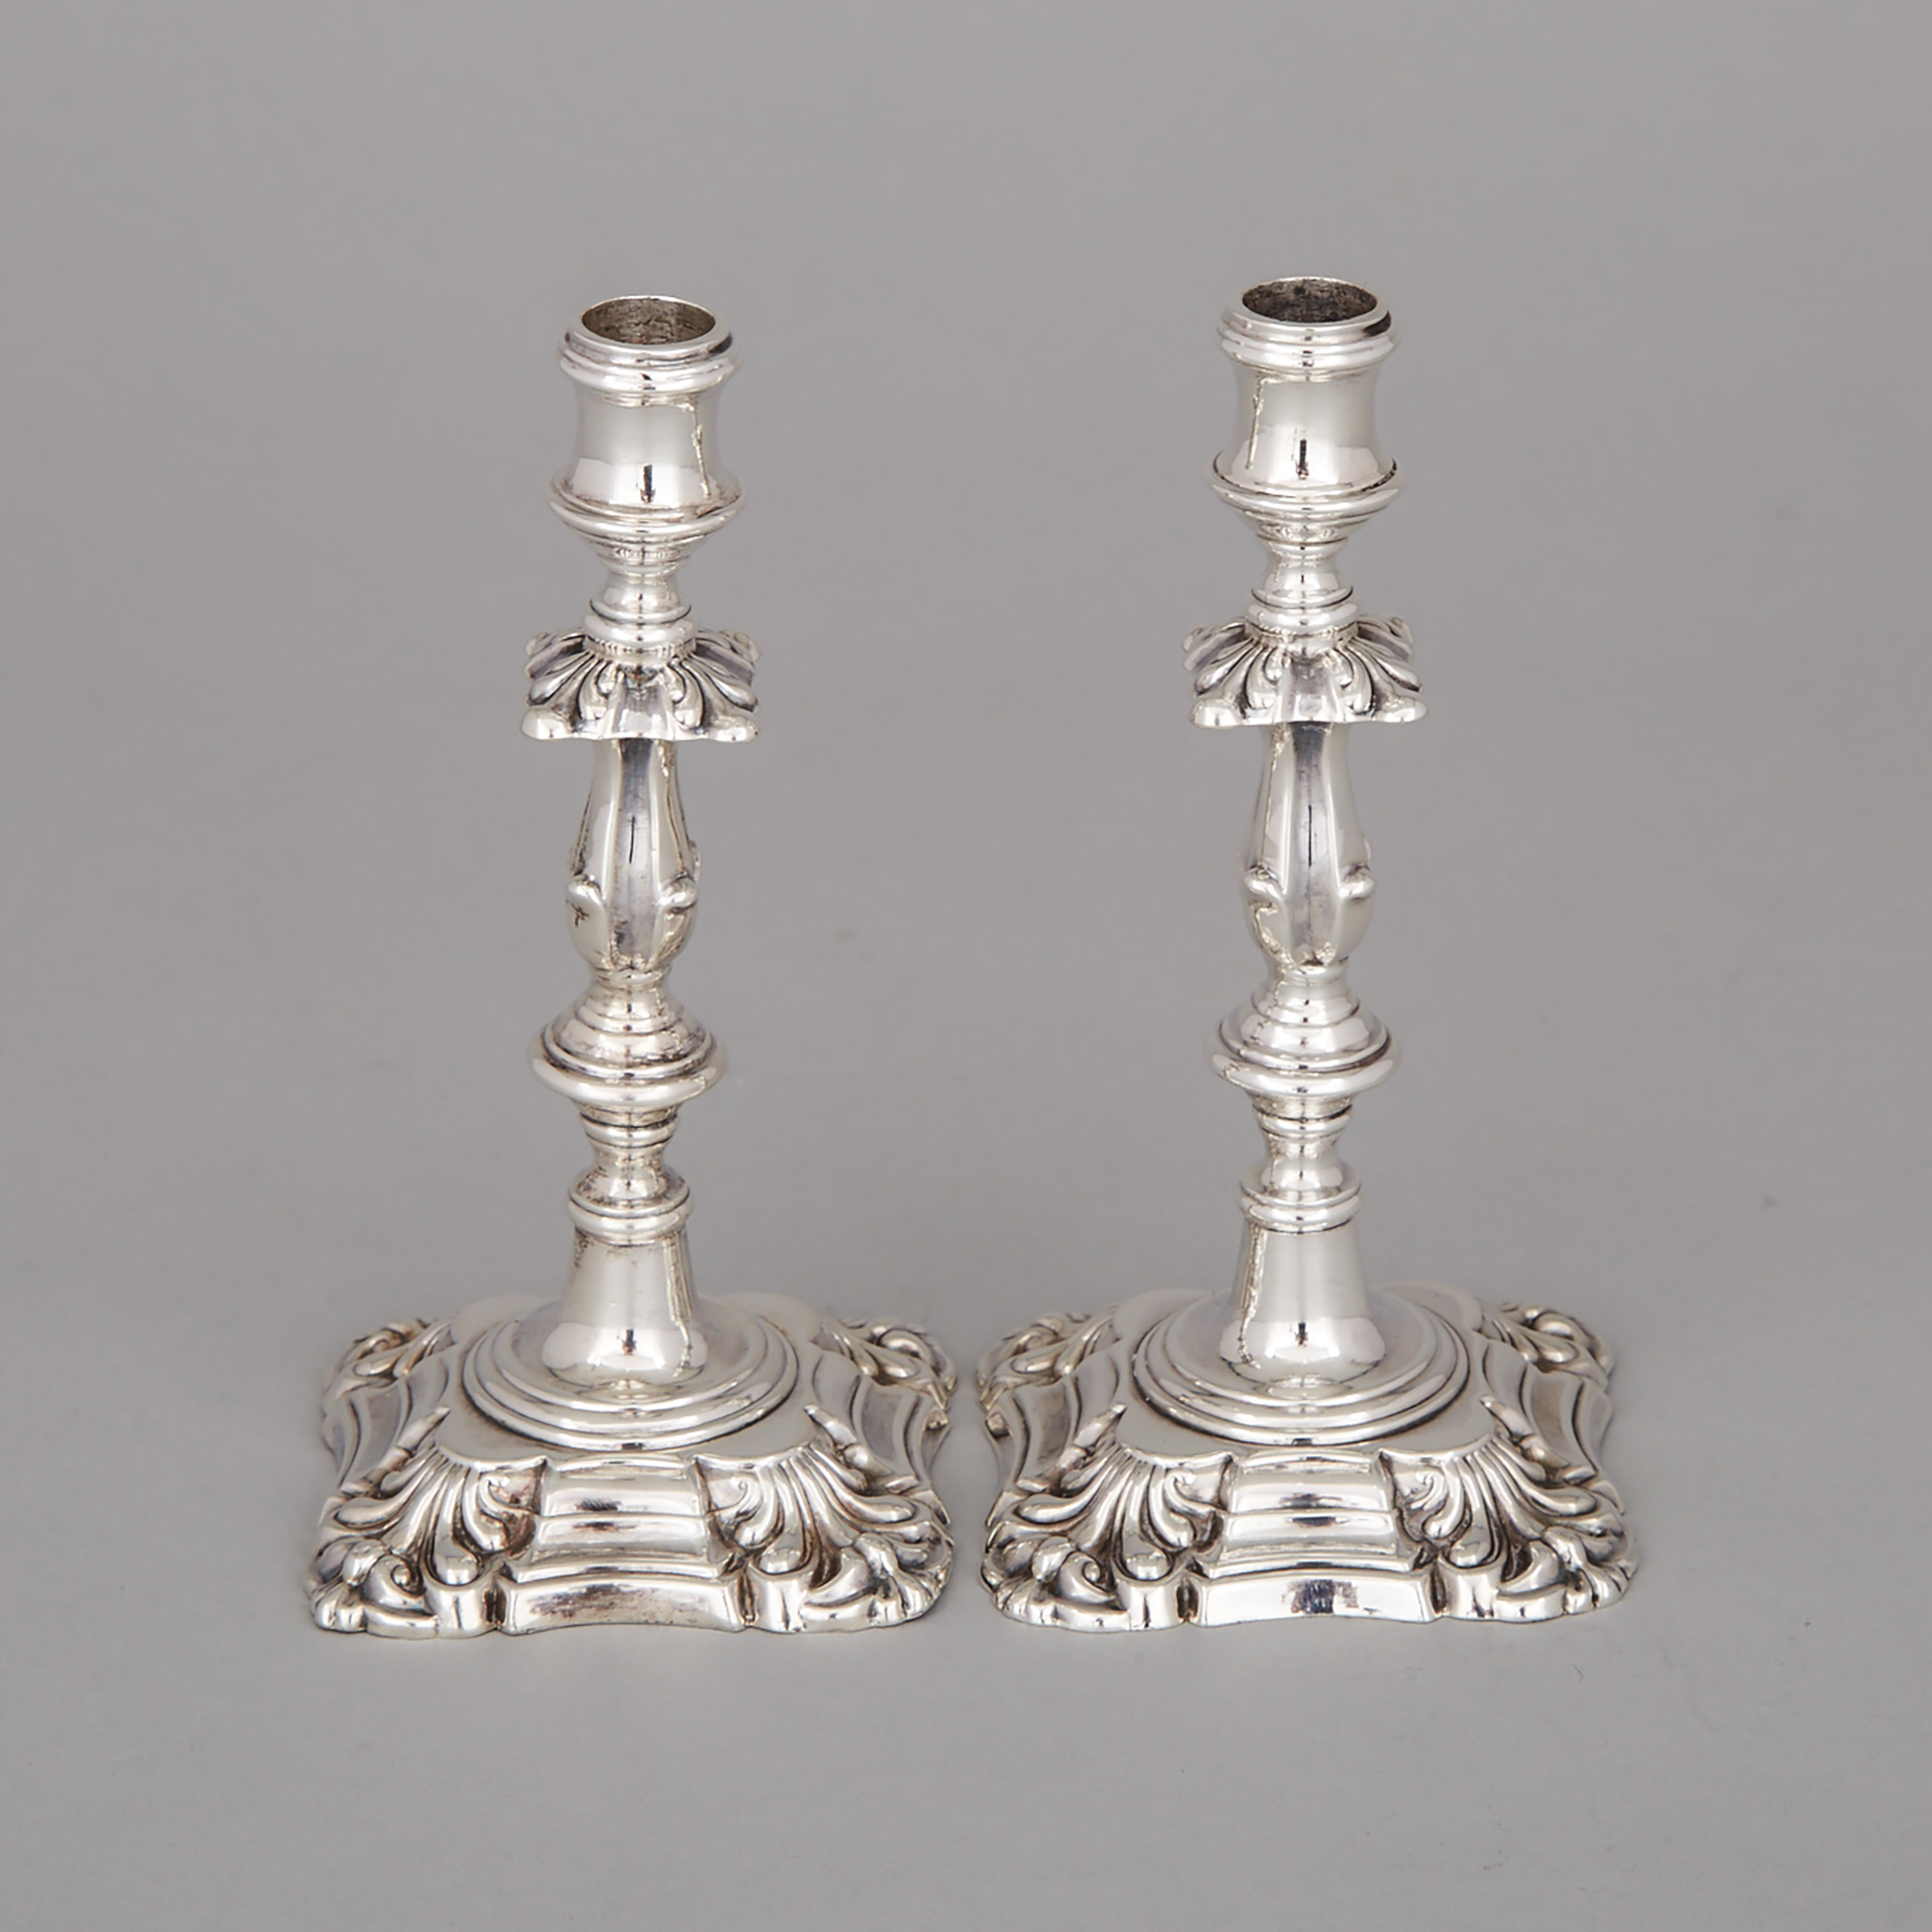 Pair of Victorian Silver Tapersticks, Henry Wilkinson & Co., Sheffield, 1840